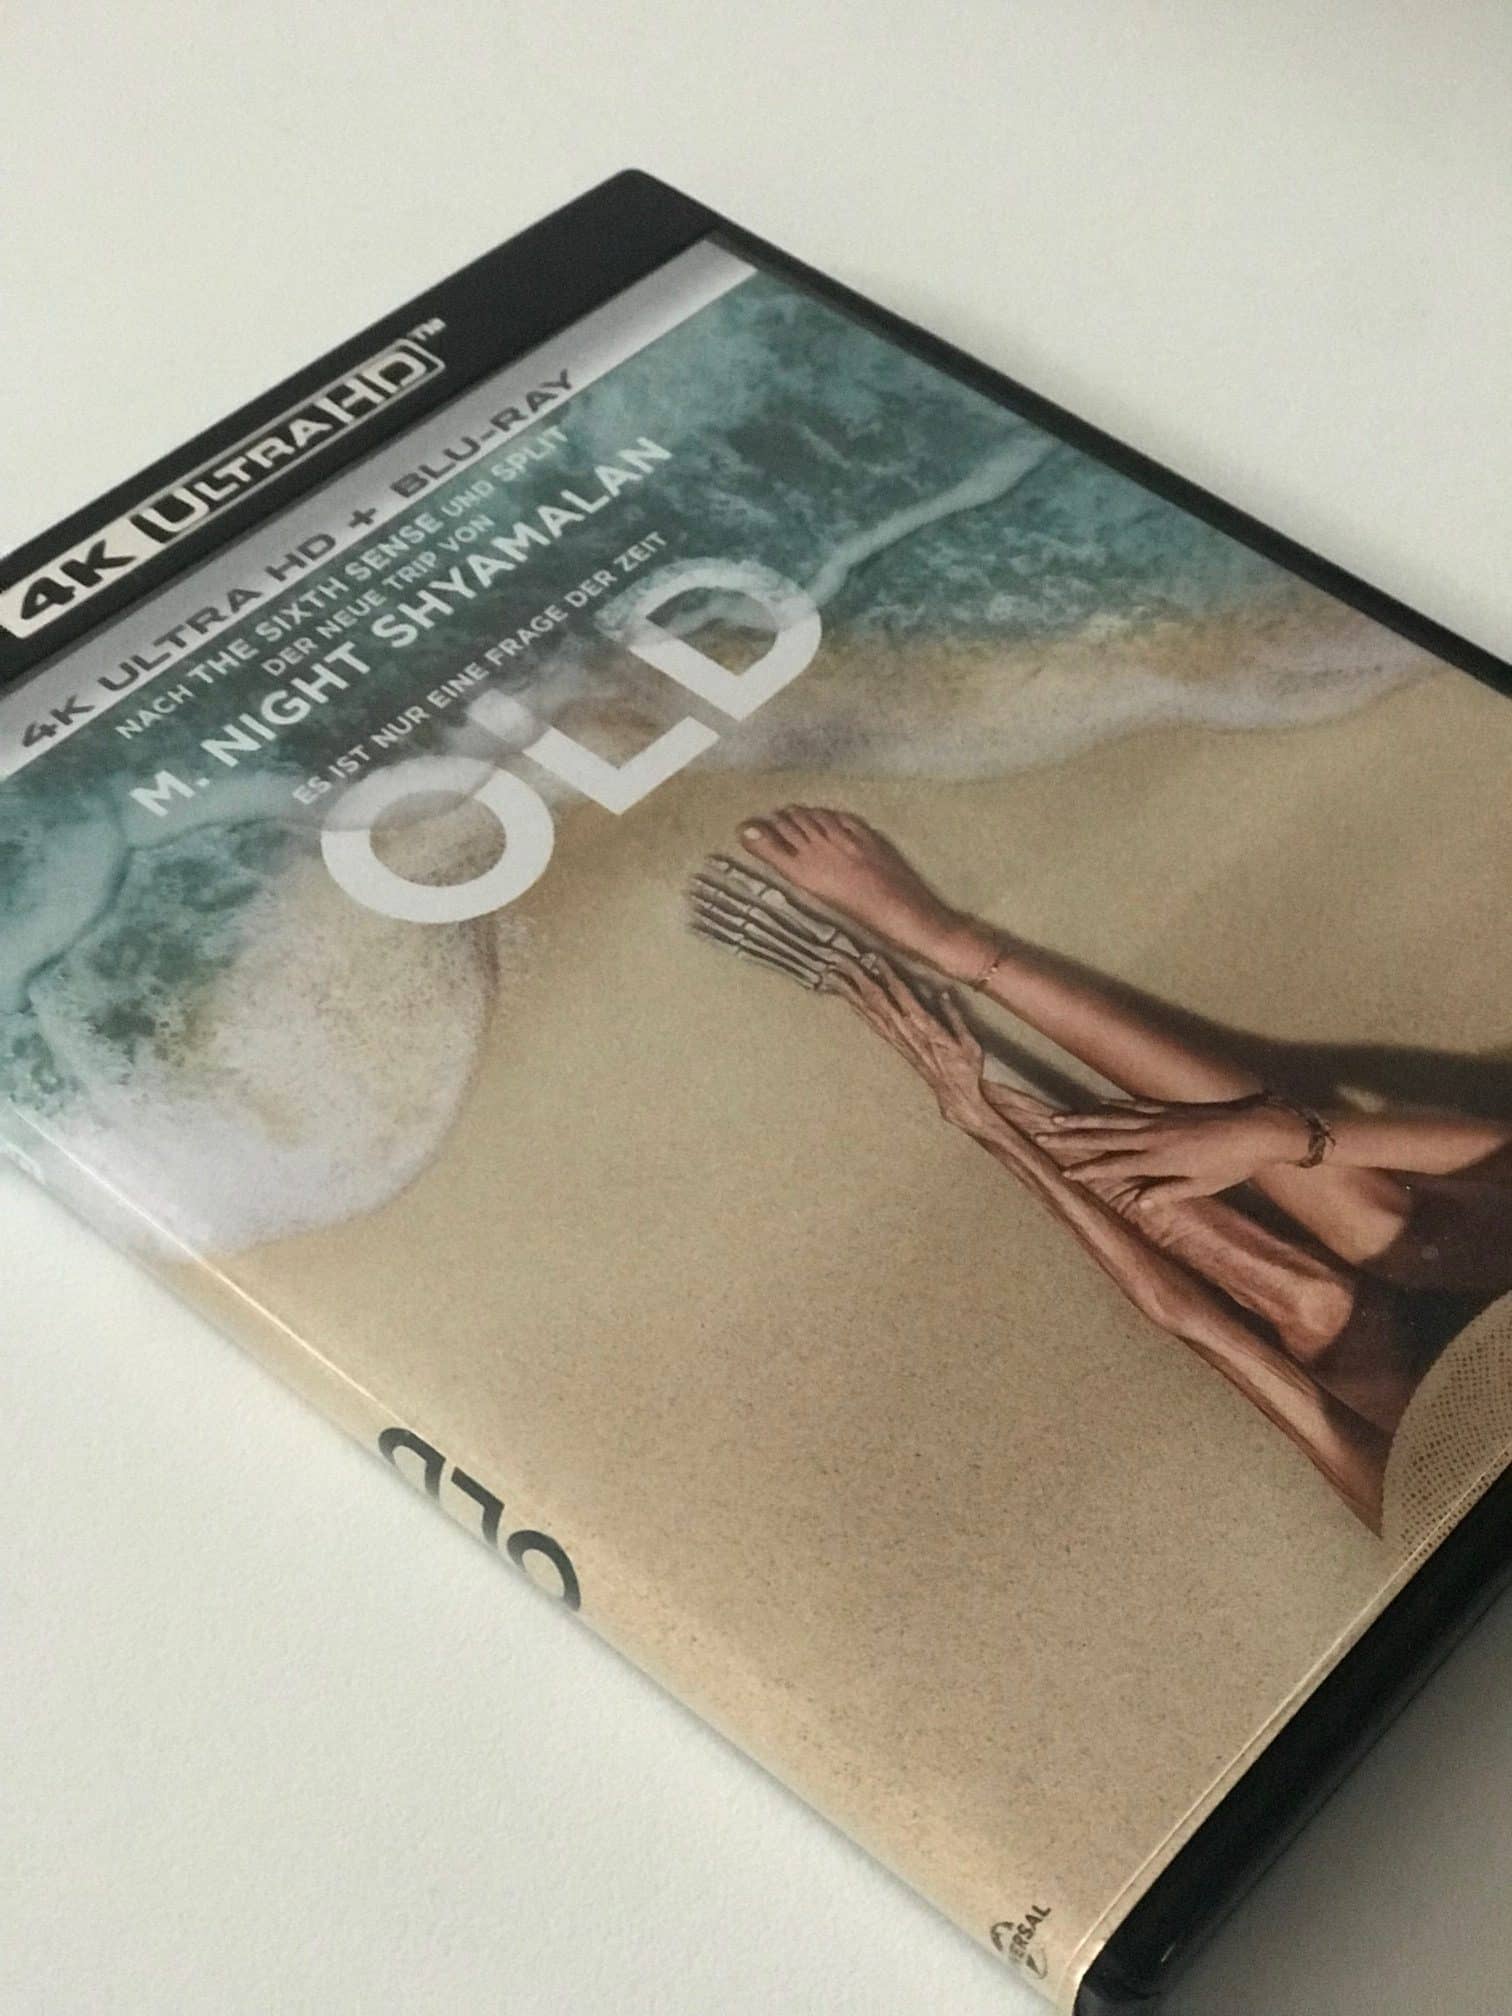 [Review] OLD von M. Night Shyamalan (4K UHD & Blu-ray)